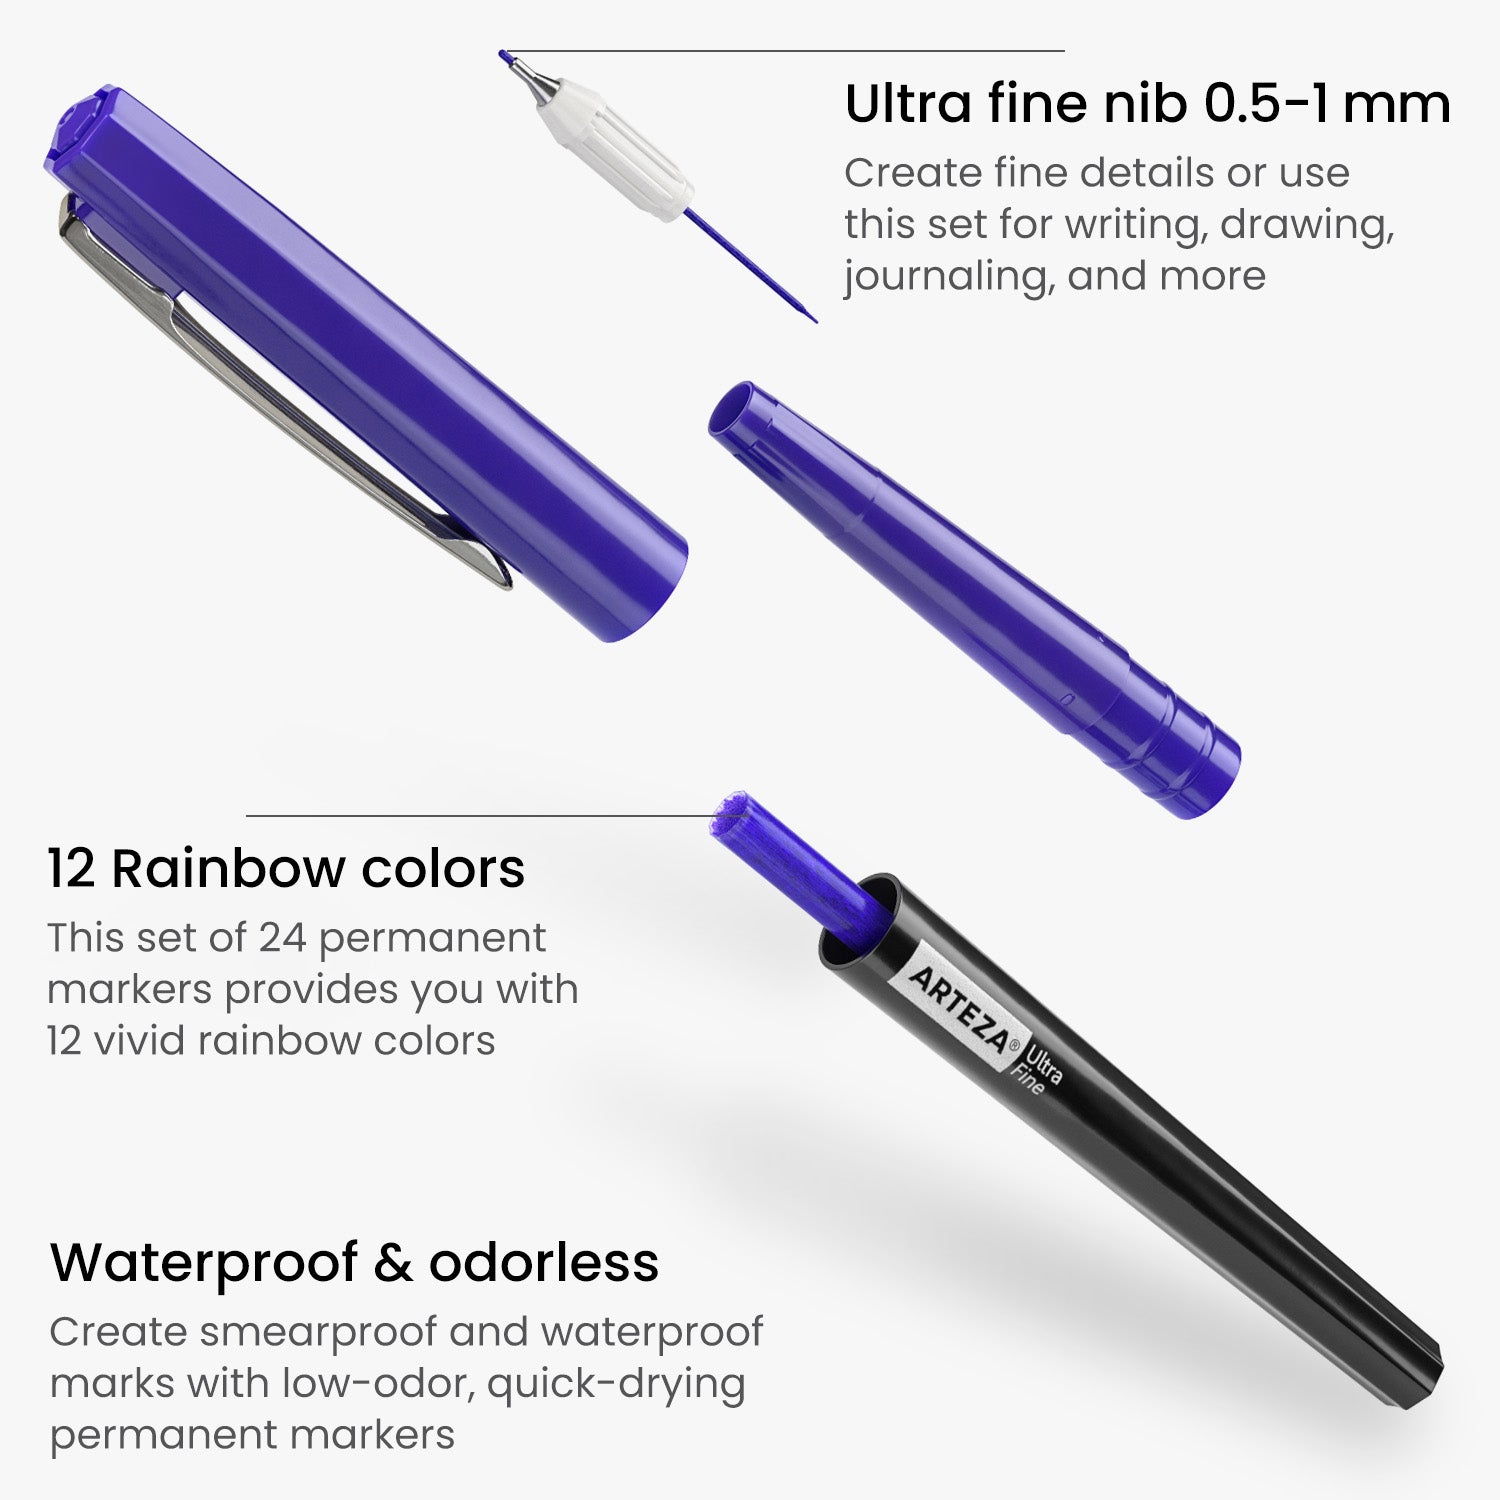 ARTEZA Black Fineliner Pens Set of 12 Ultra-Fine Point Pens for